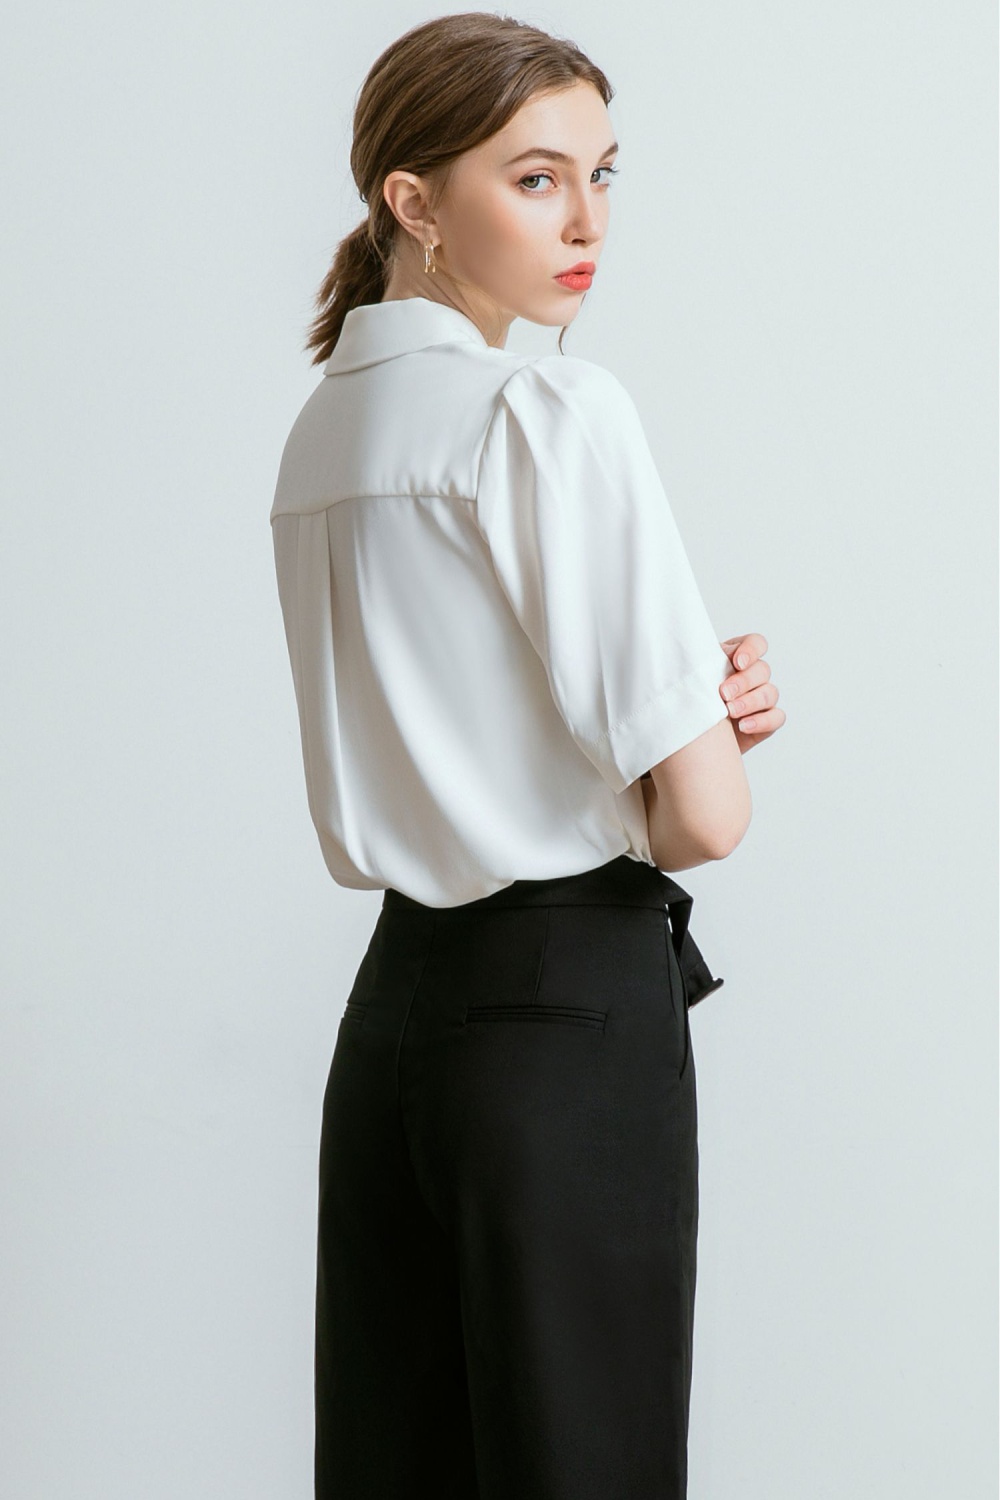 Profession short sleeve summer chiffon shirt for women